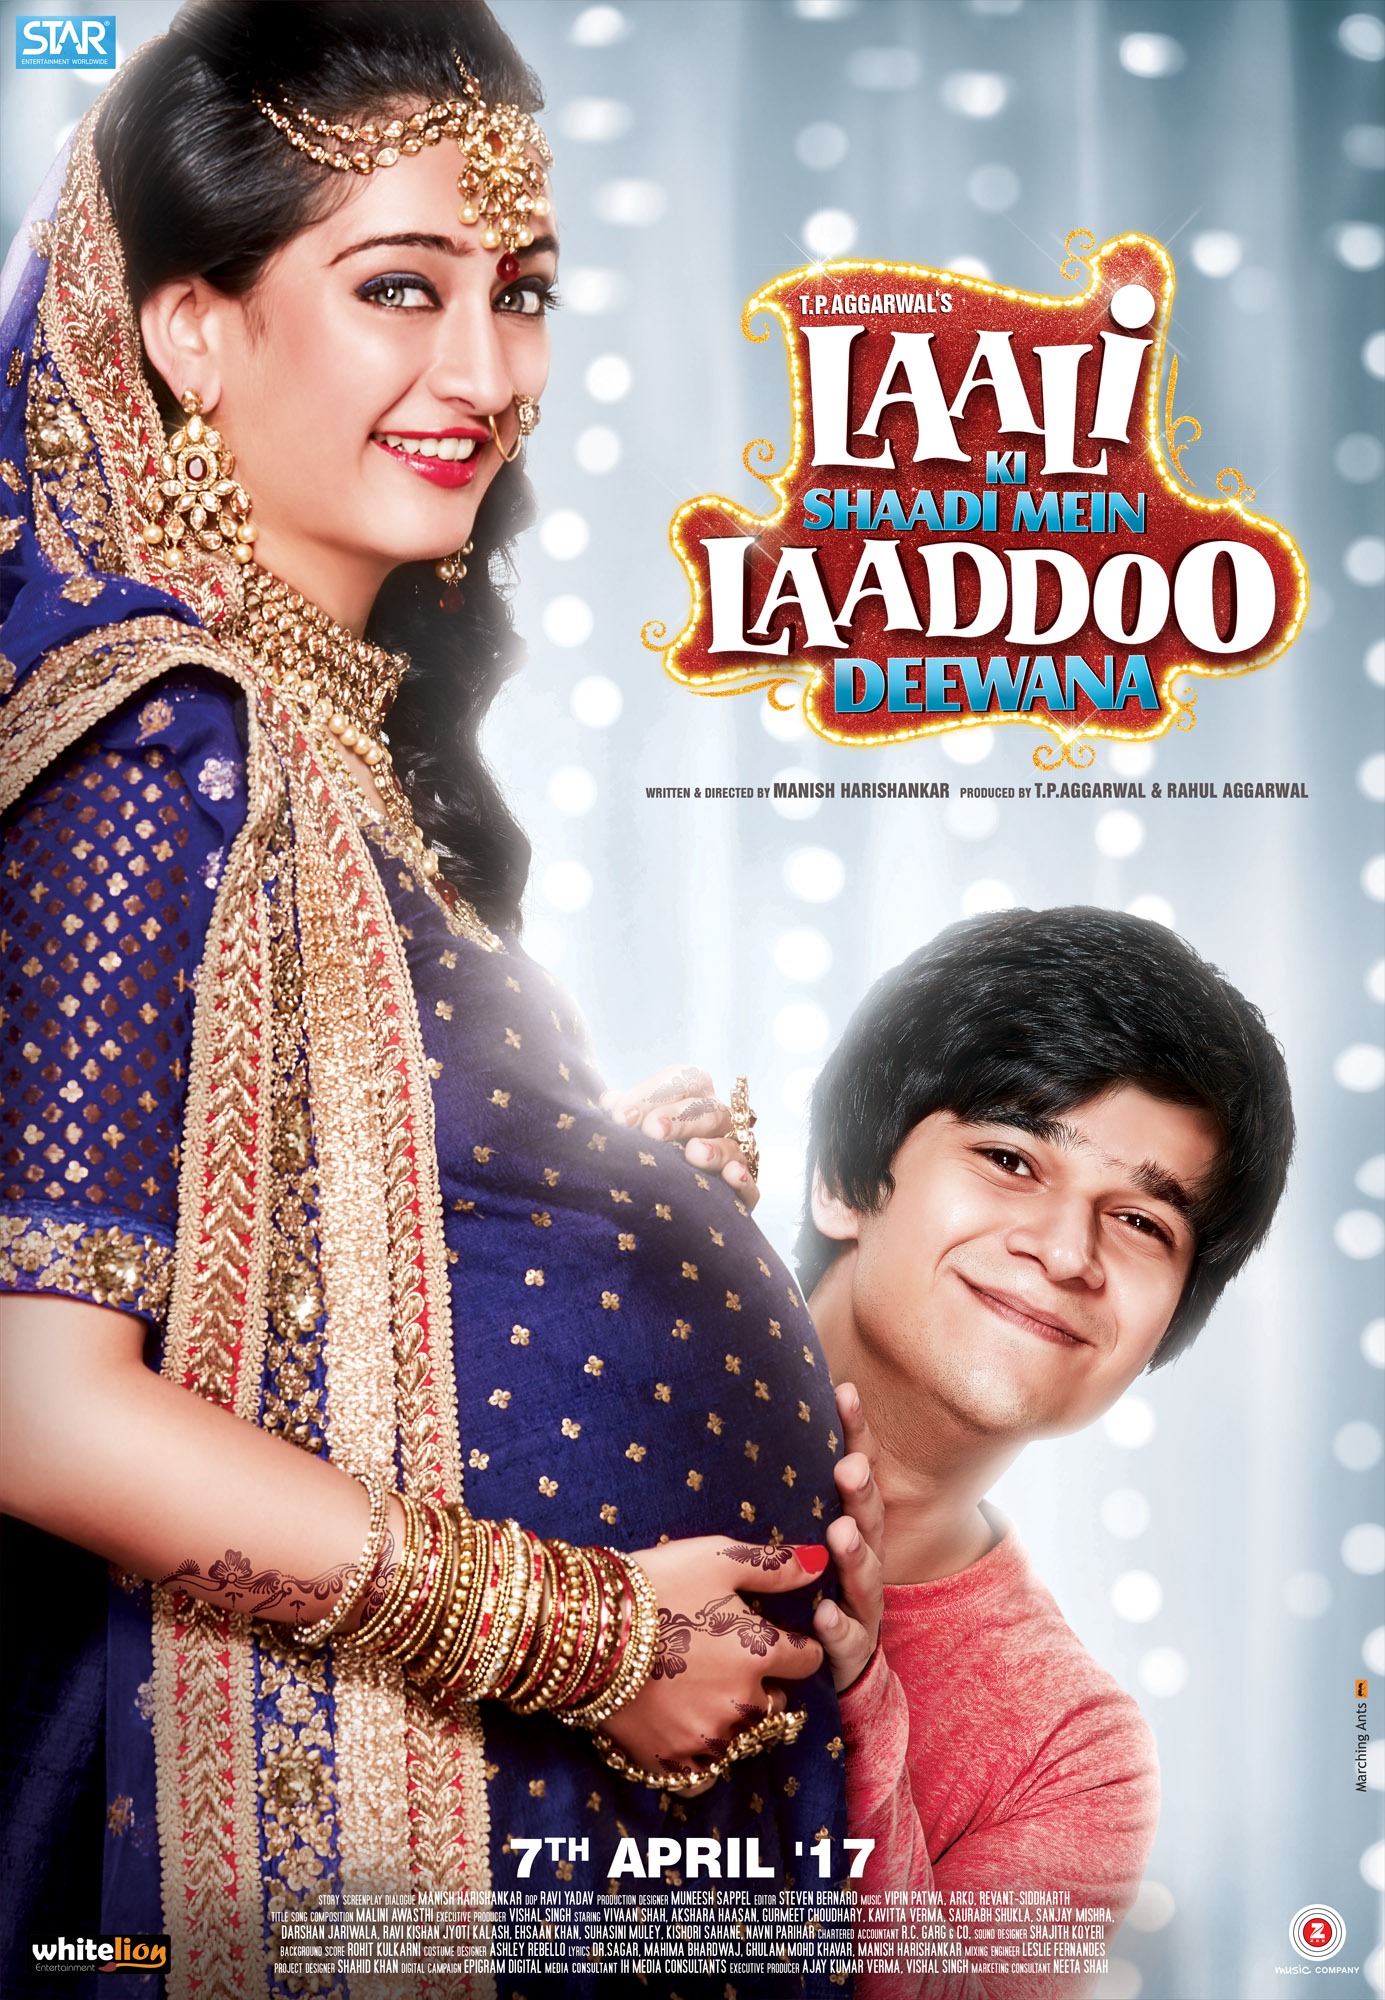 Mega Sized Movie Poster Image for Laali Ki Shaadi Mein Laaddoo Deewana (#2 of 3)